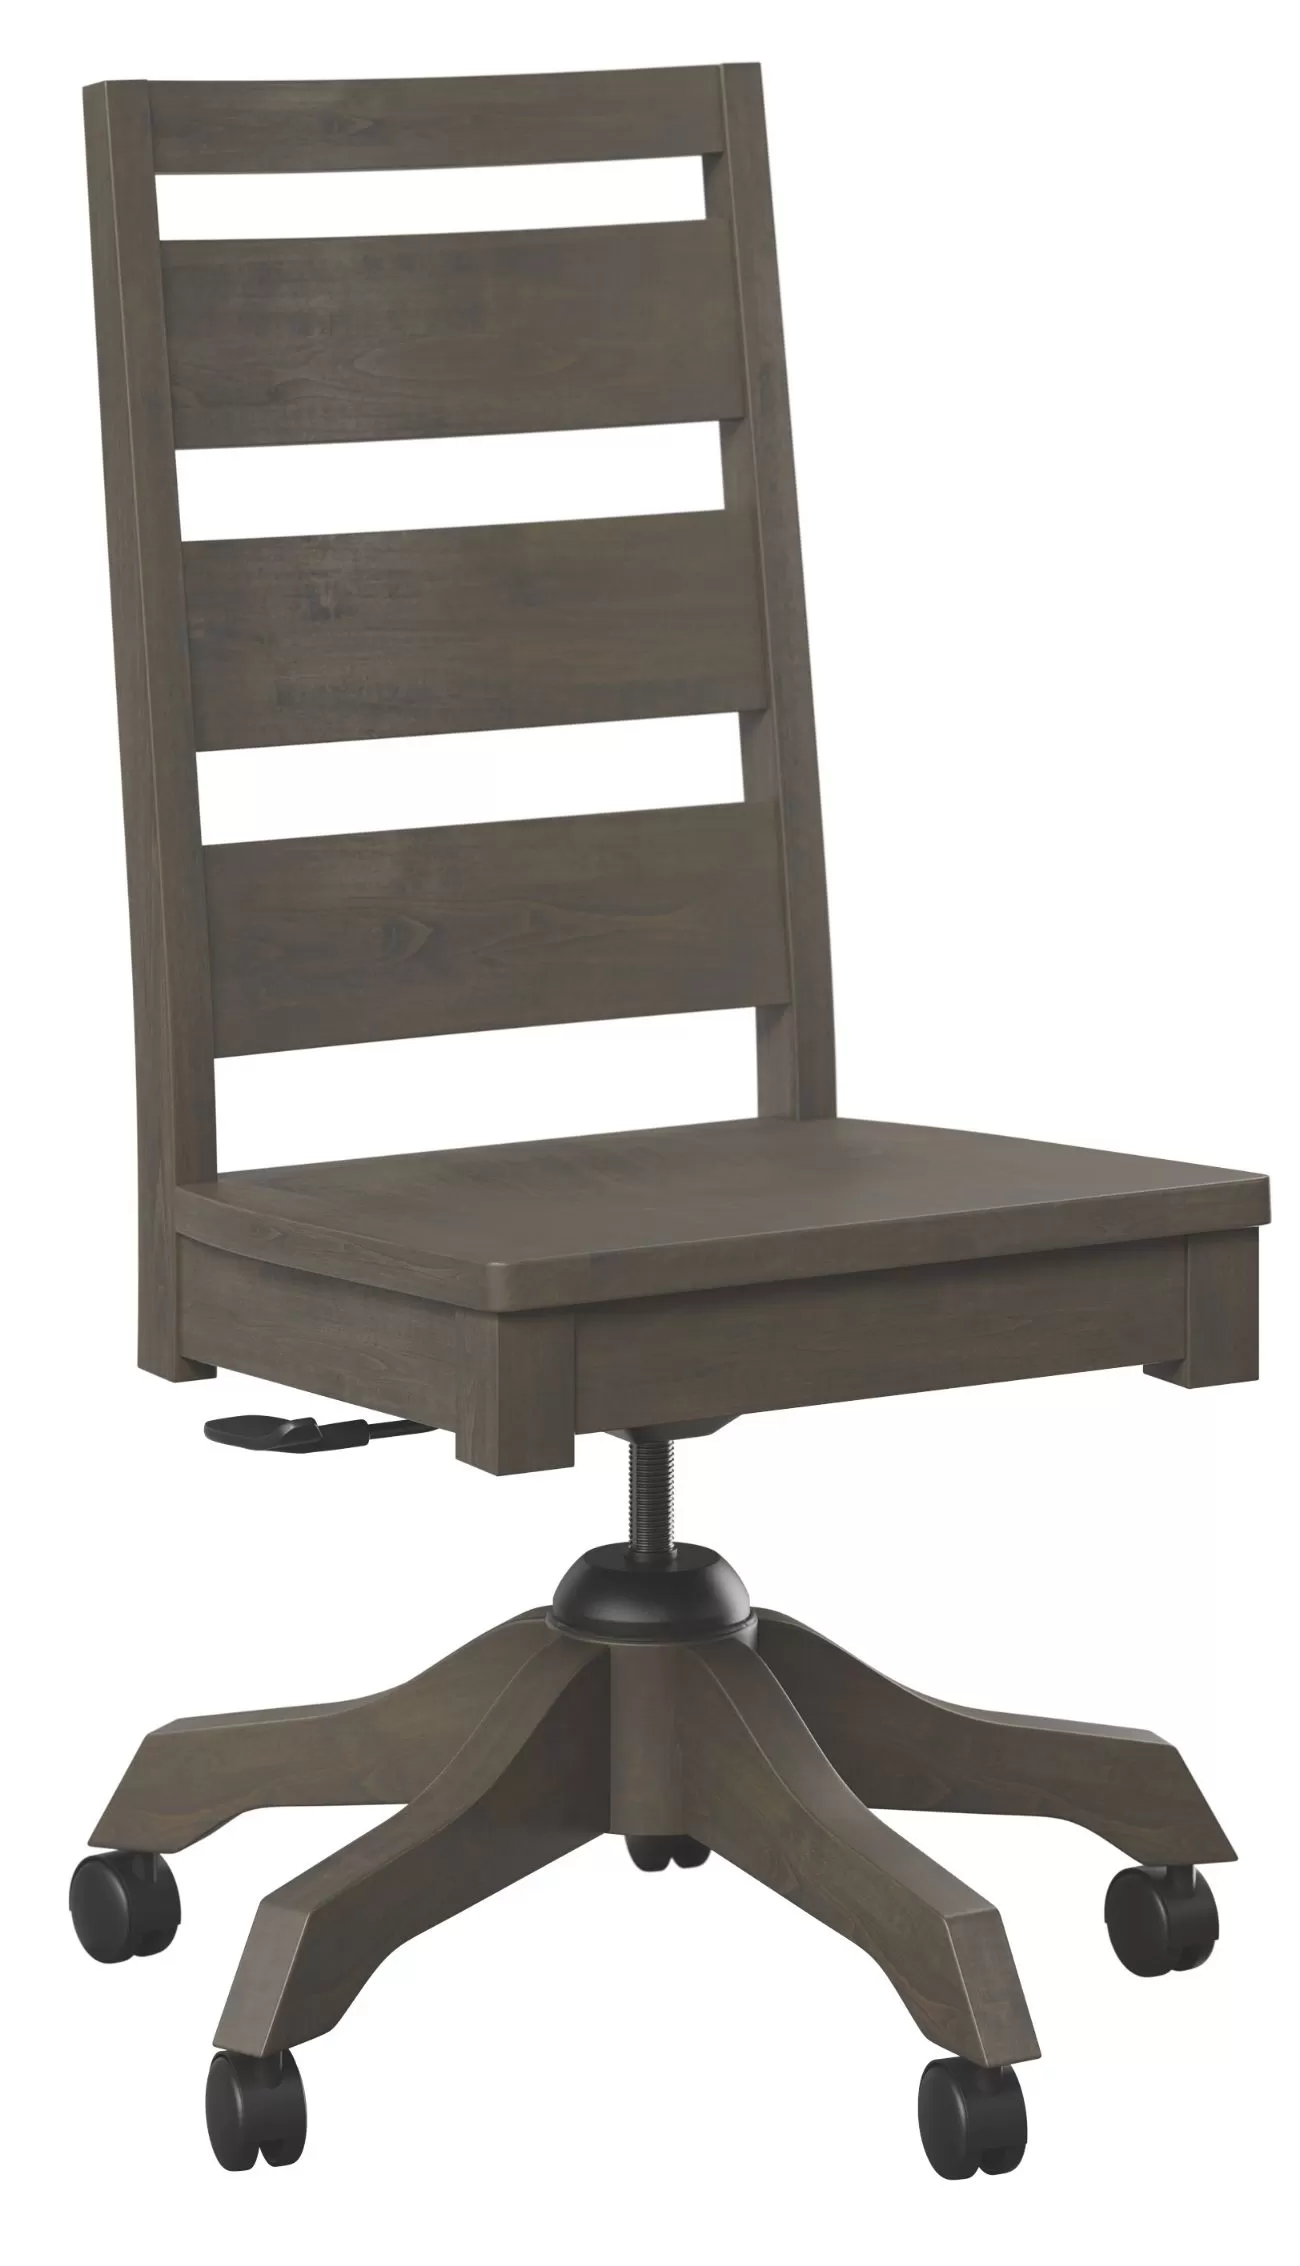 Lakeland side desk chair